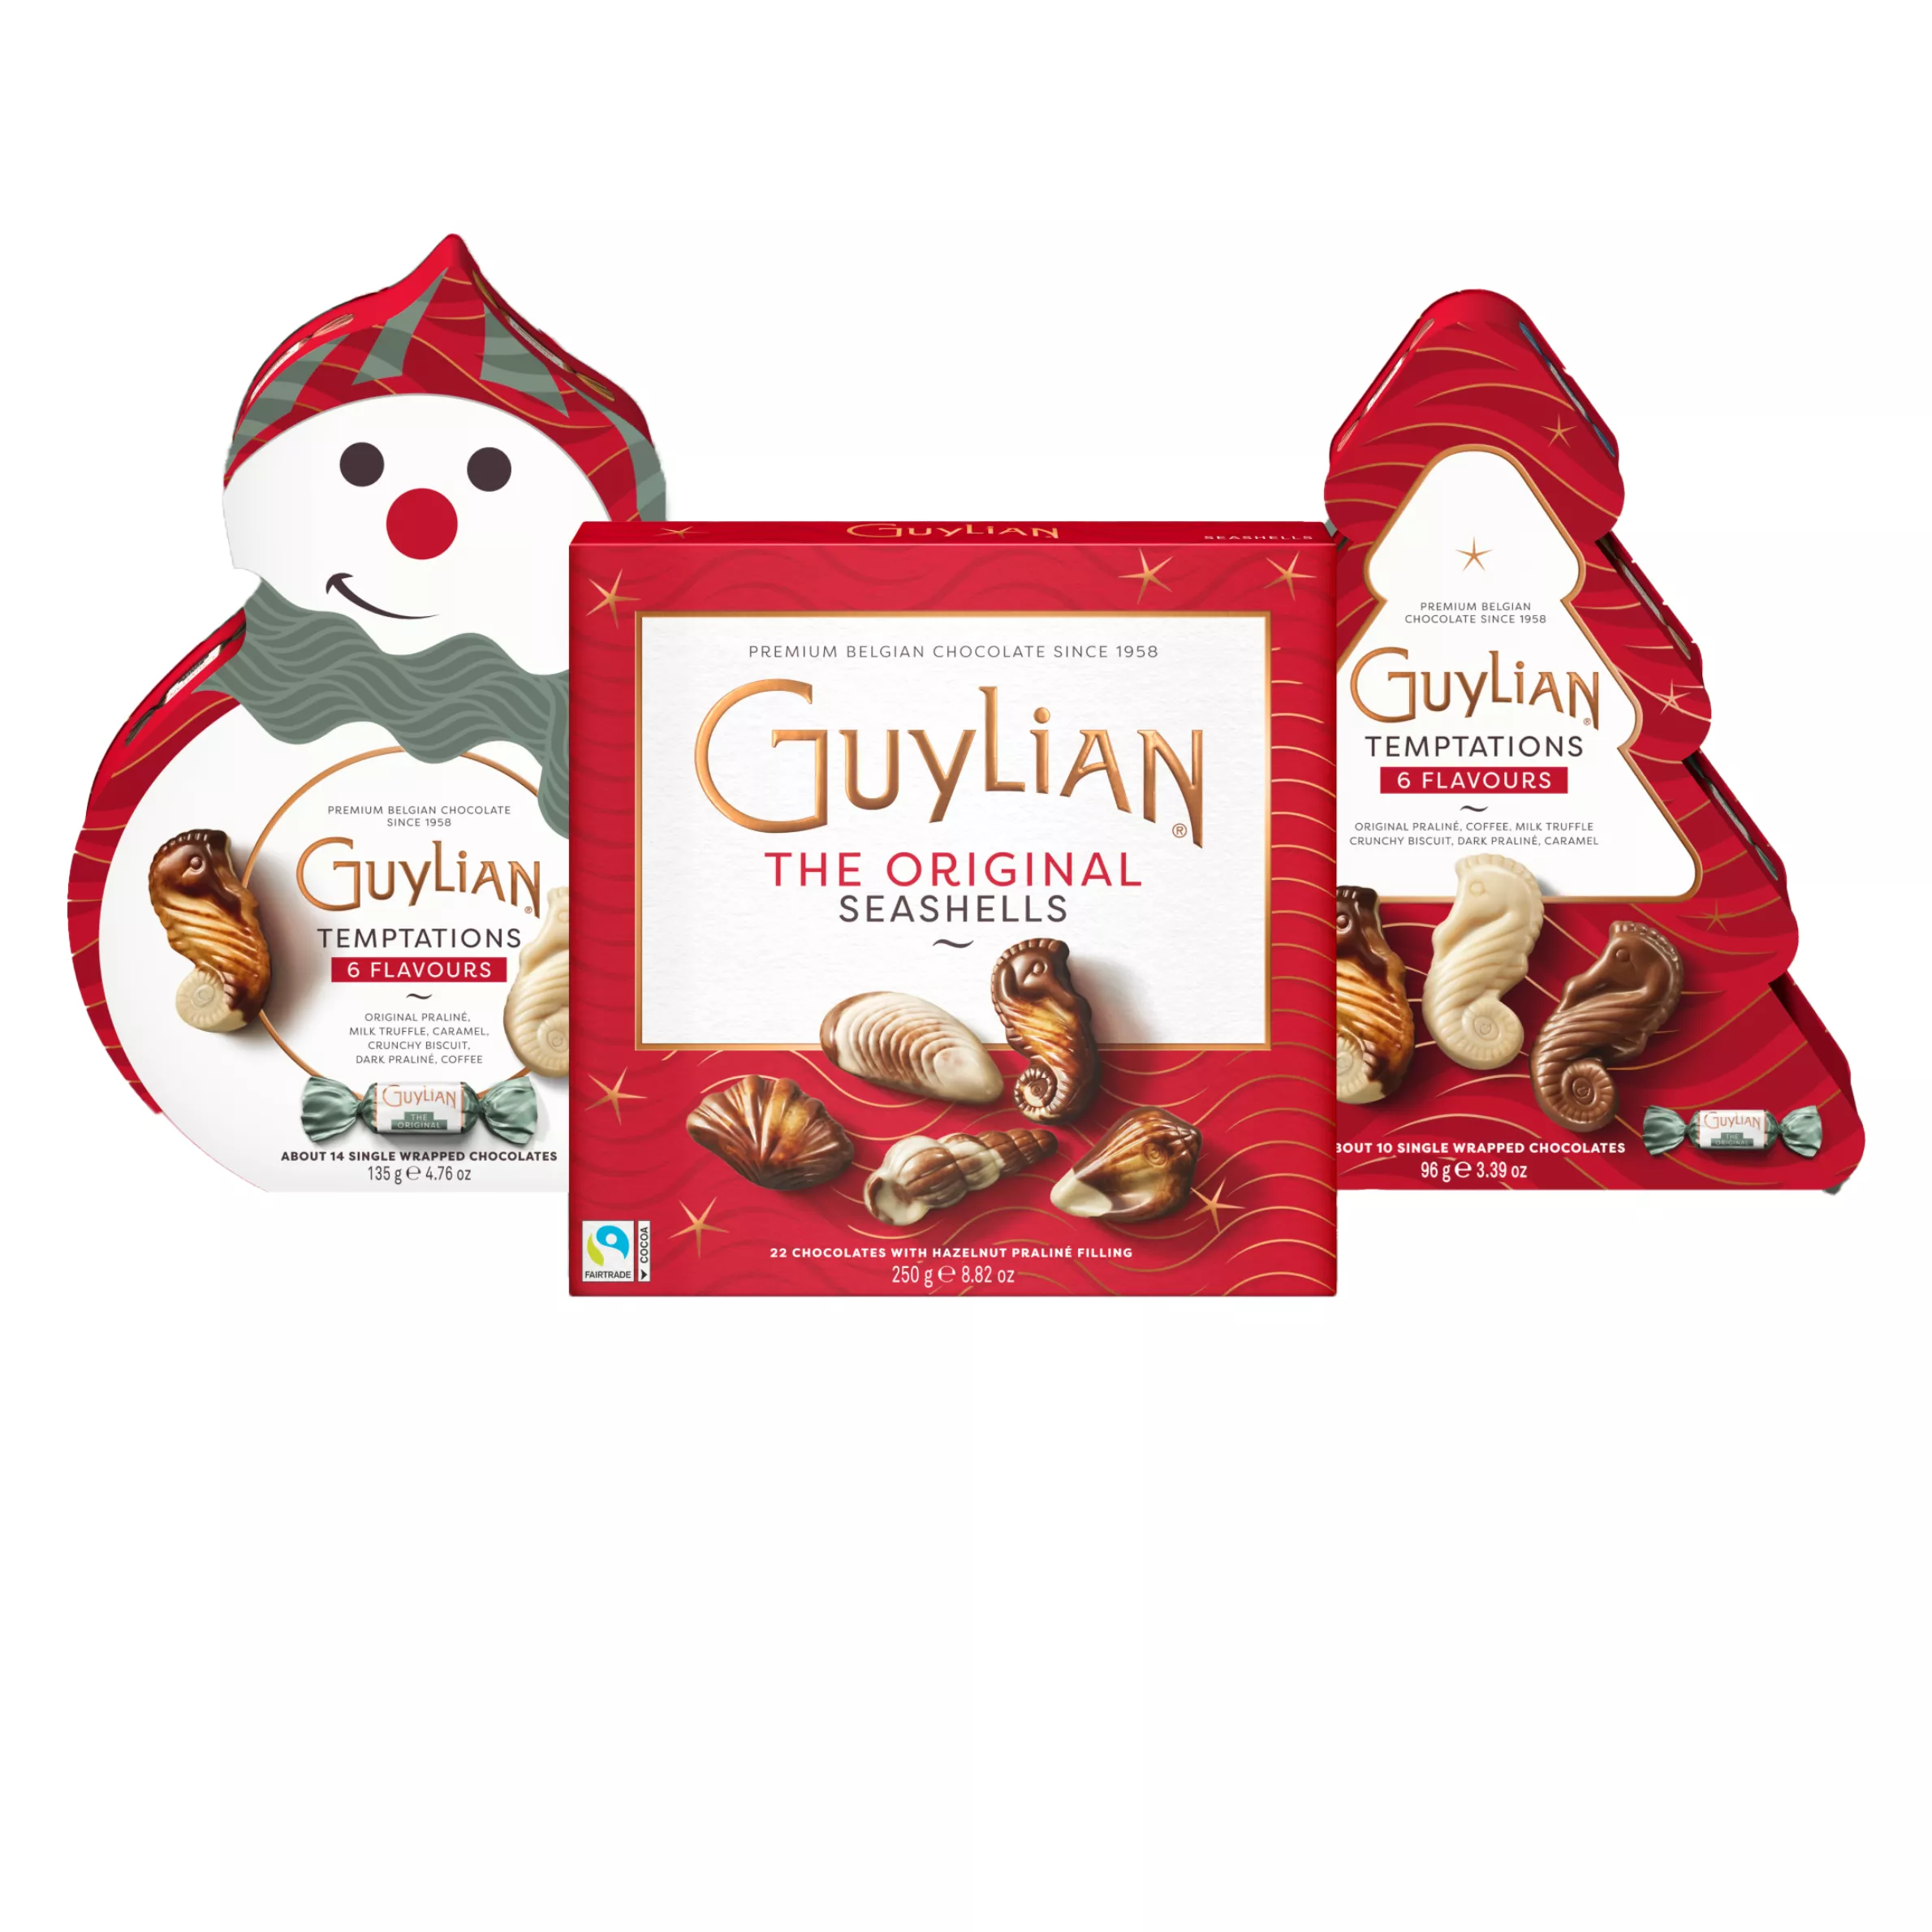 Guylian Temptations fruits de mer chocolat Bonhomme de neige